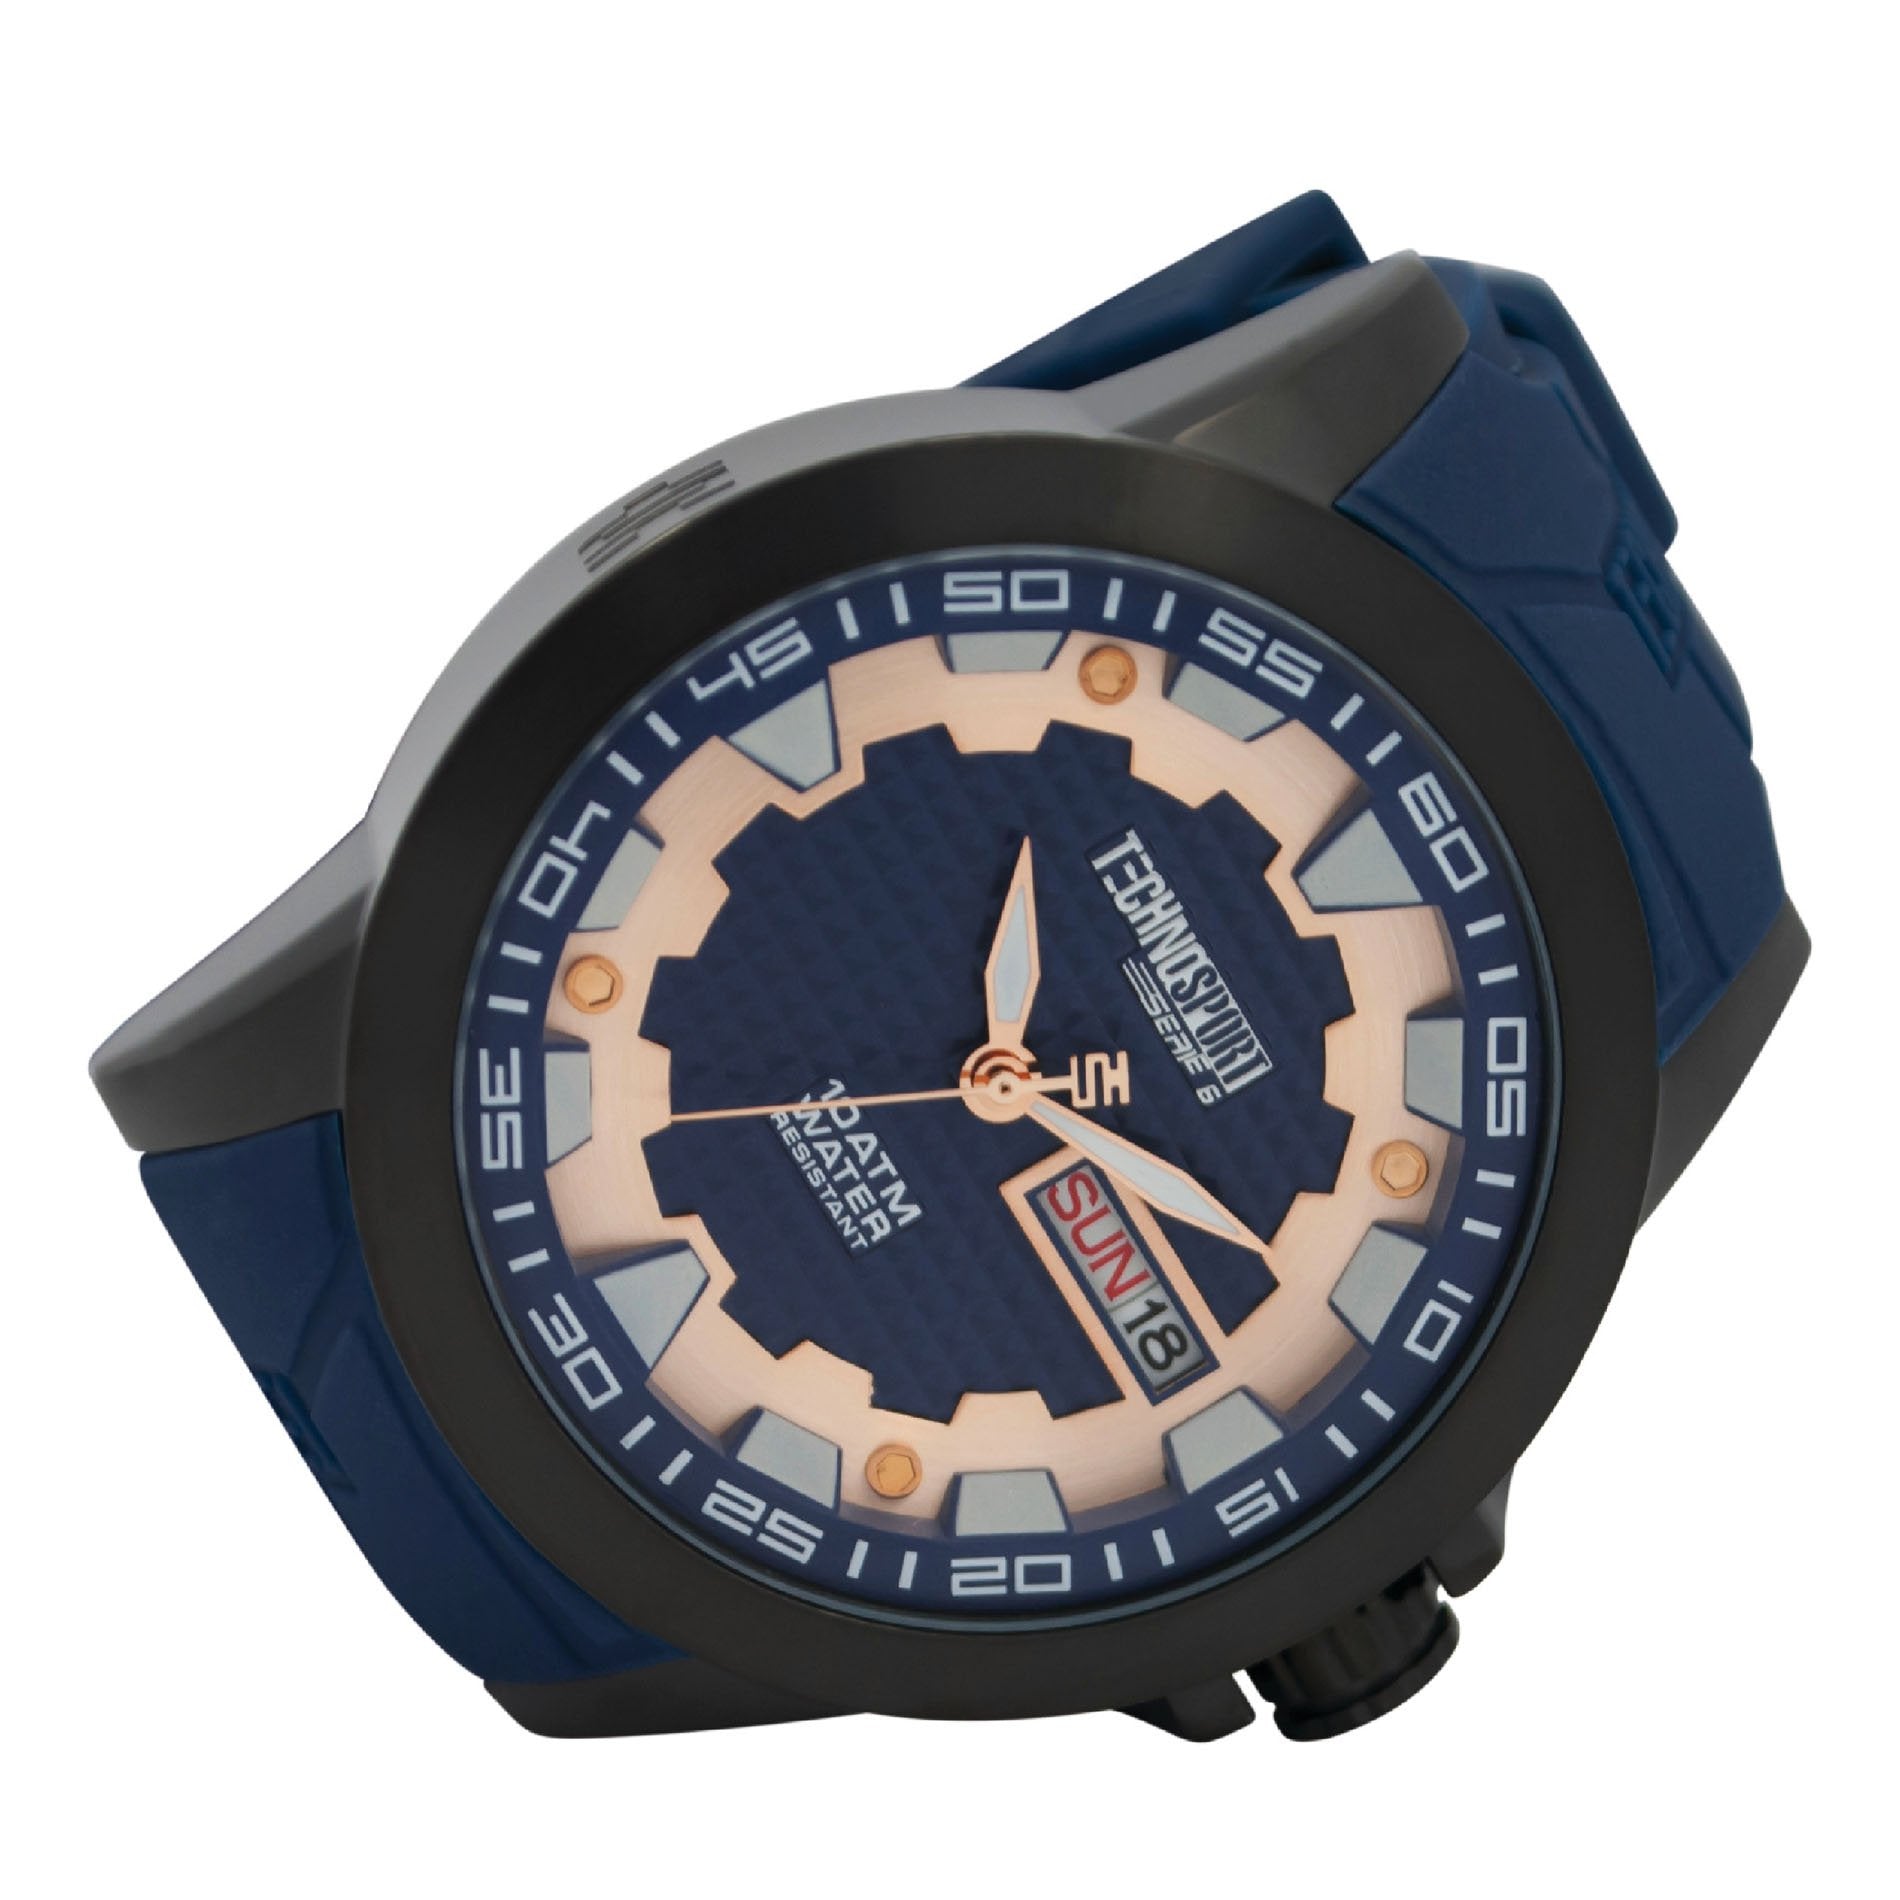 Reloj Technosport Mujer TS6- Azul